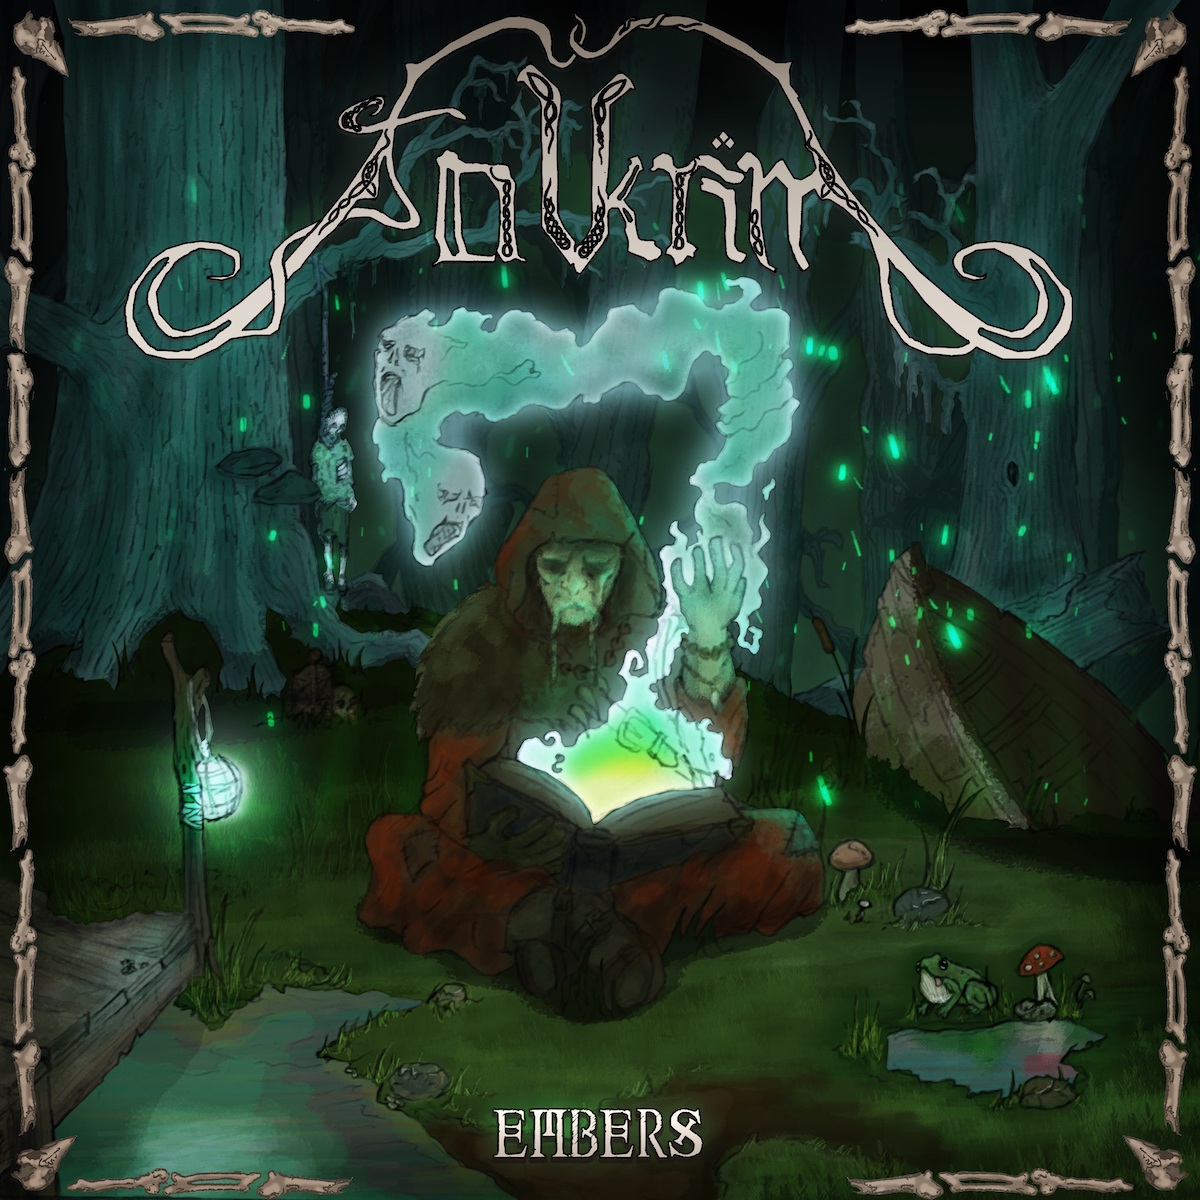 ALBUM REVIEW: Embers by Folkrim